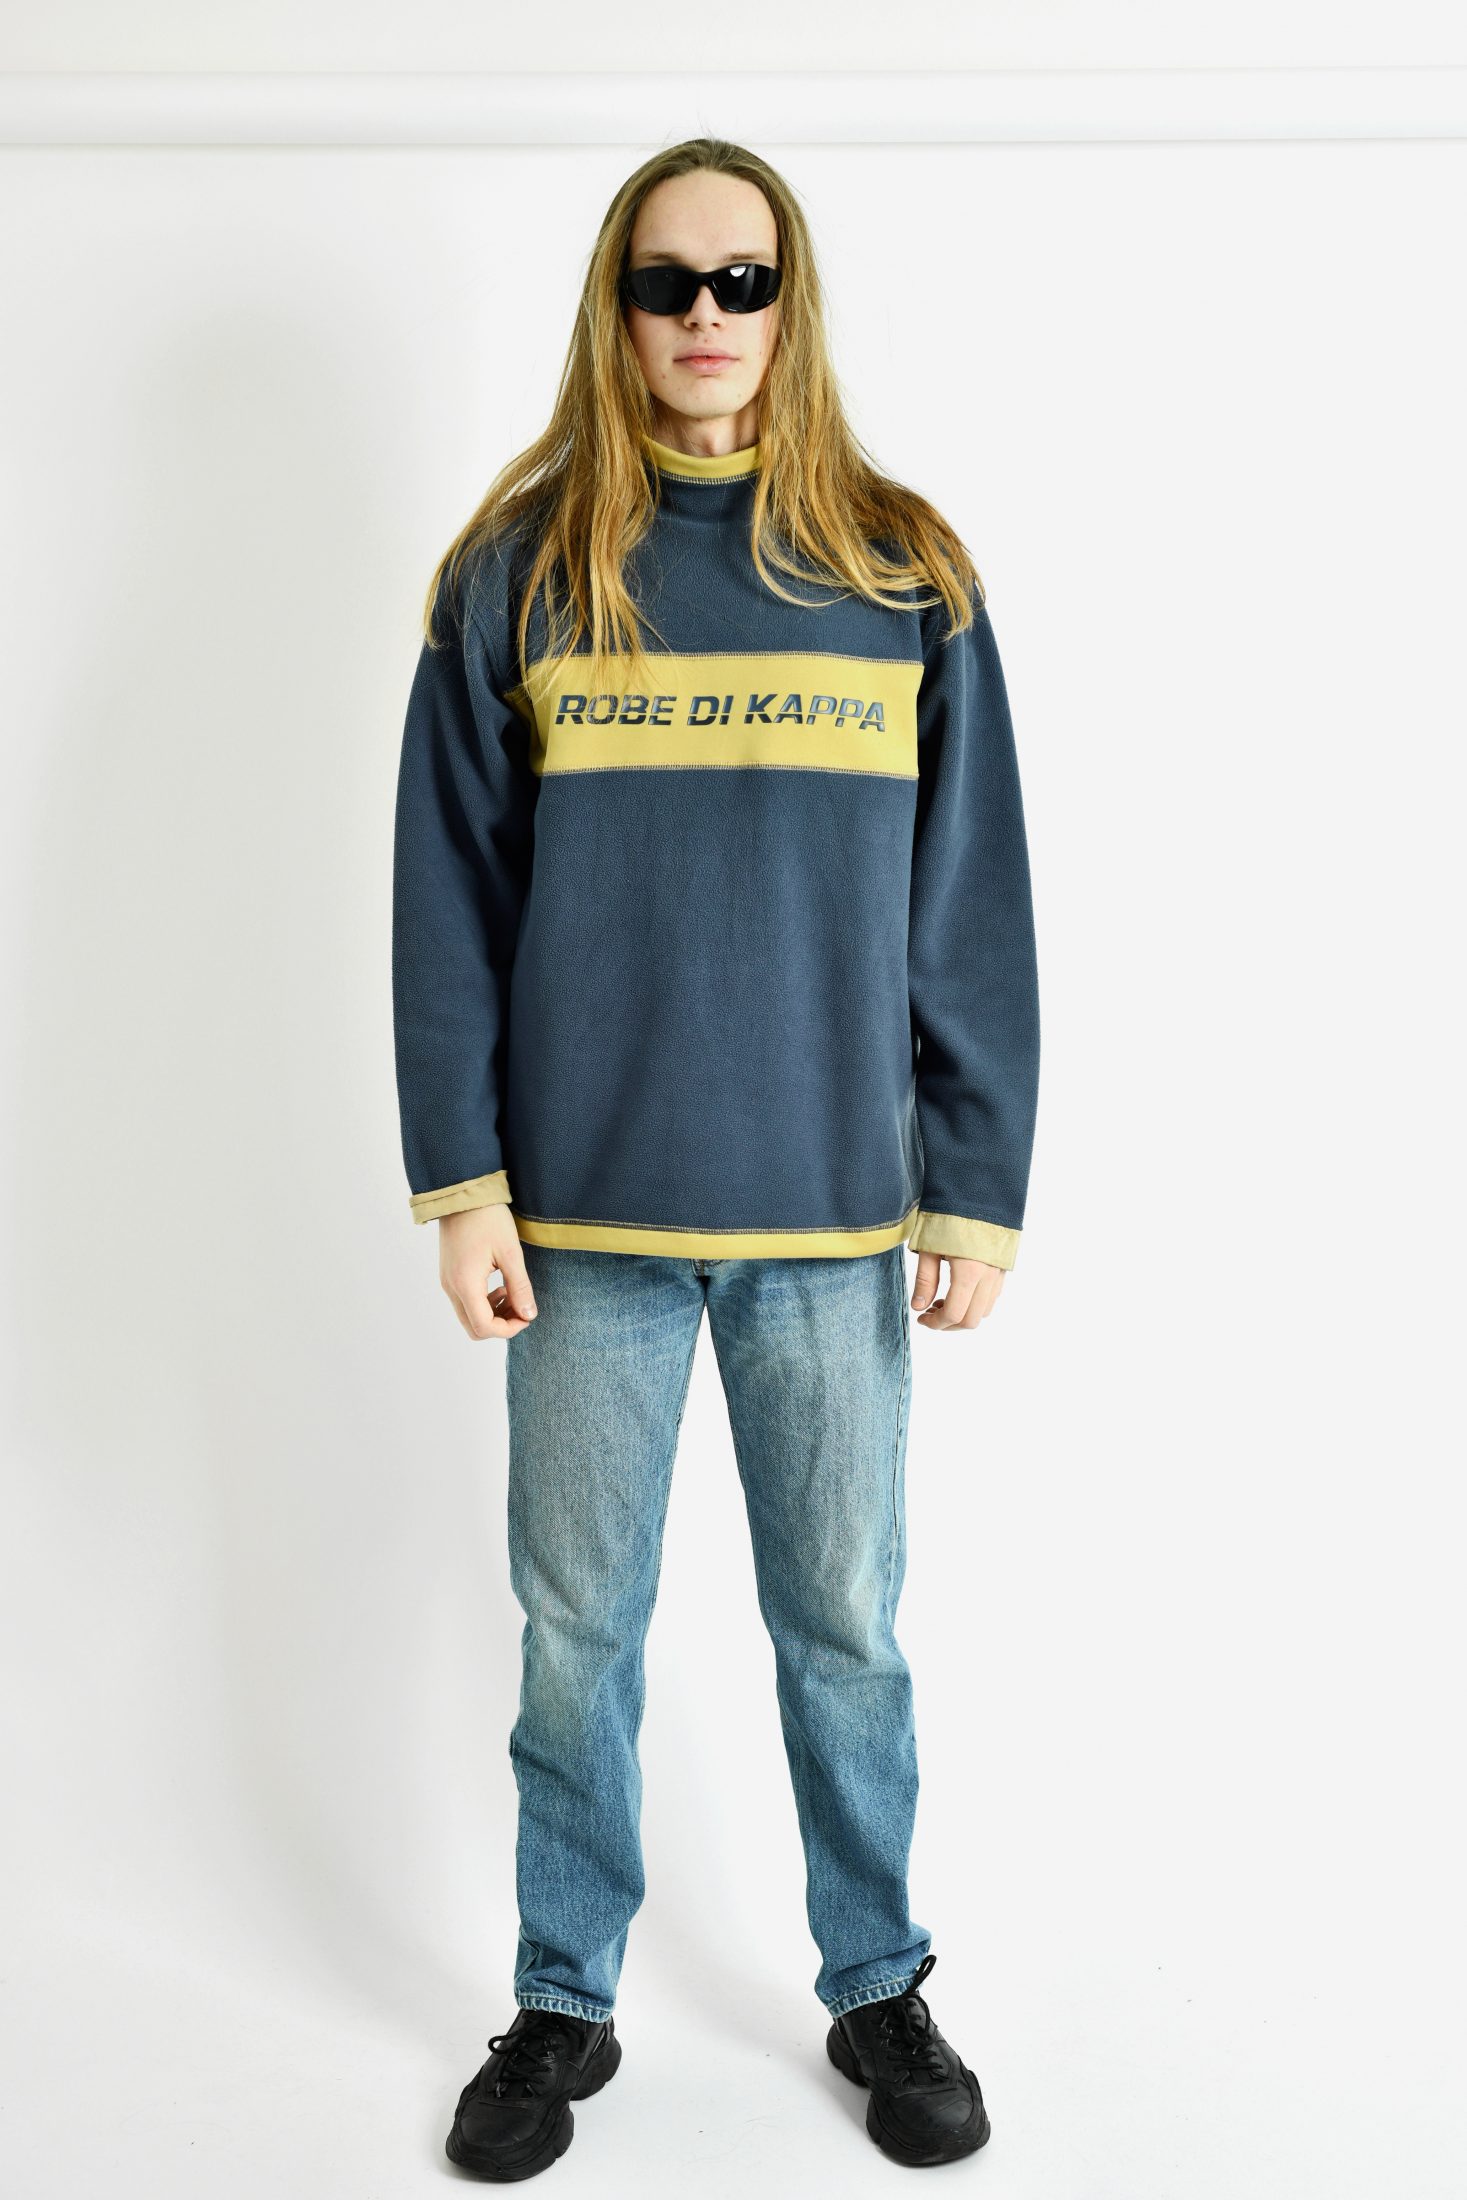 KAPPA retro fleece sweatshirt | Vintage clothes online for men